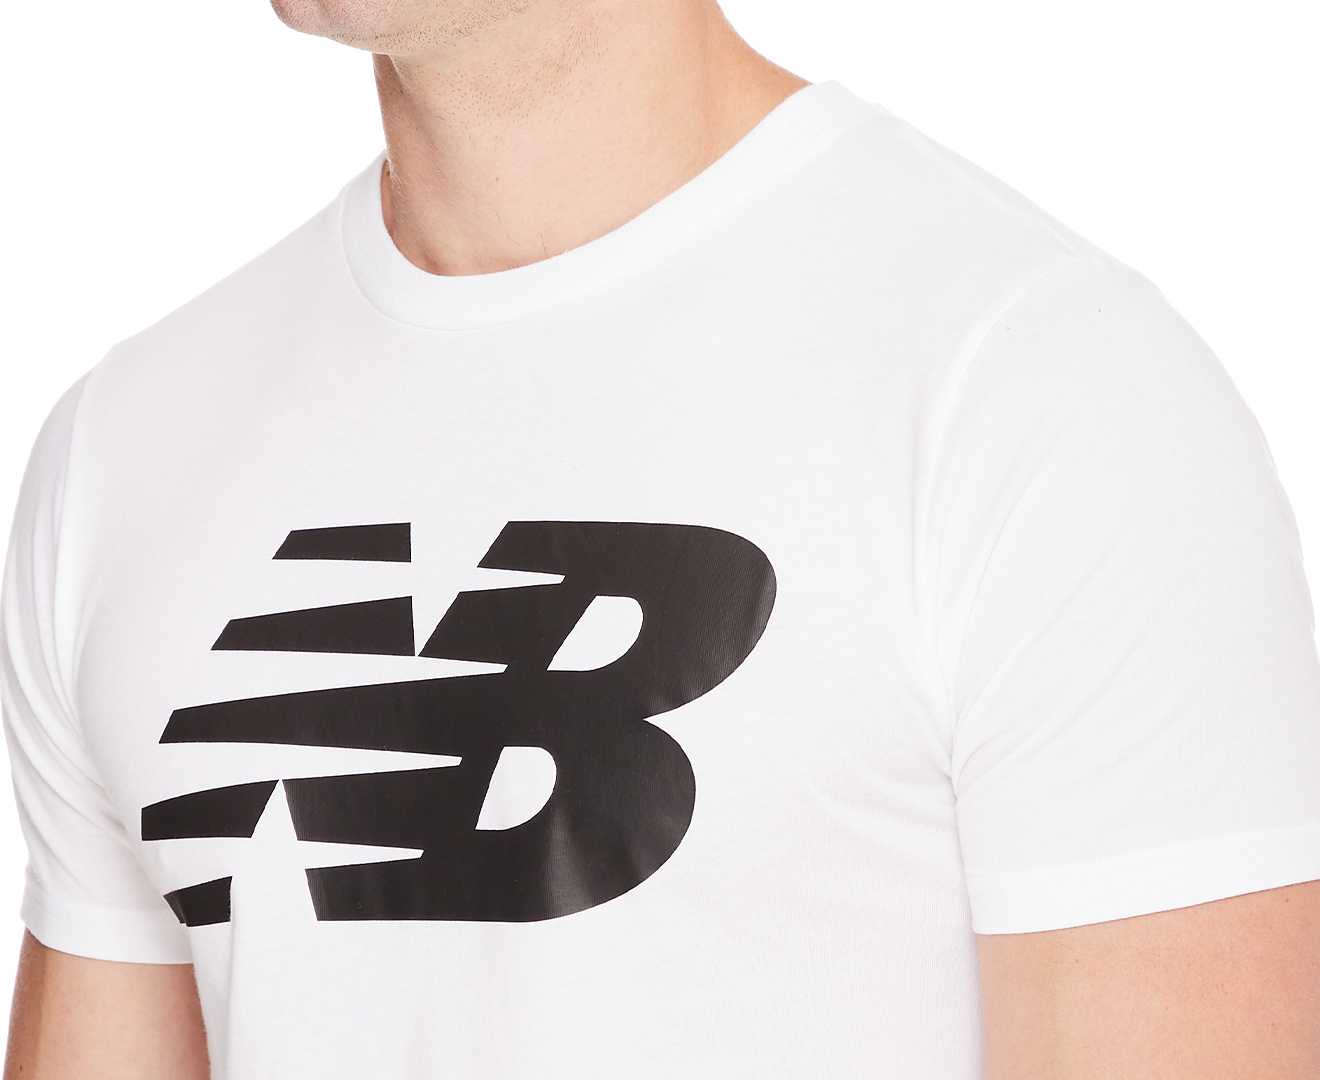 New Balance Men's Classic Tee / T-Shirt / Tshirt - White | Catch.com.au